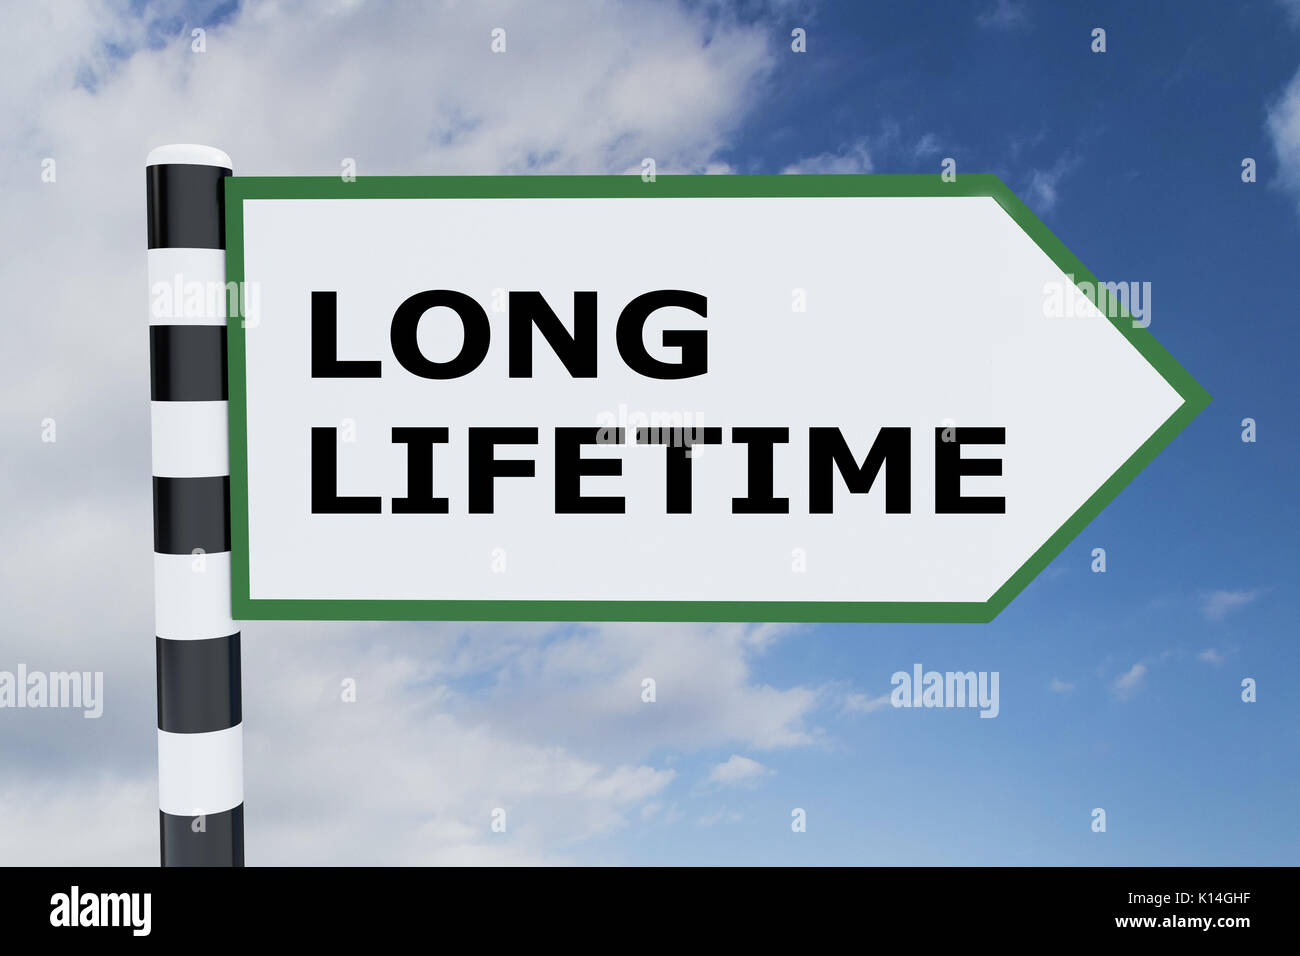 3D illustration of 'LONG LIFETIME' script on road sign Stock Photo